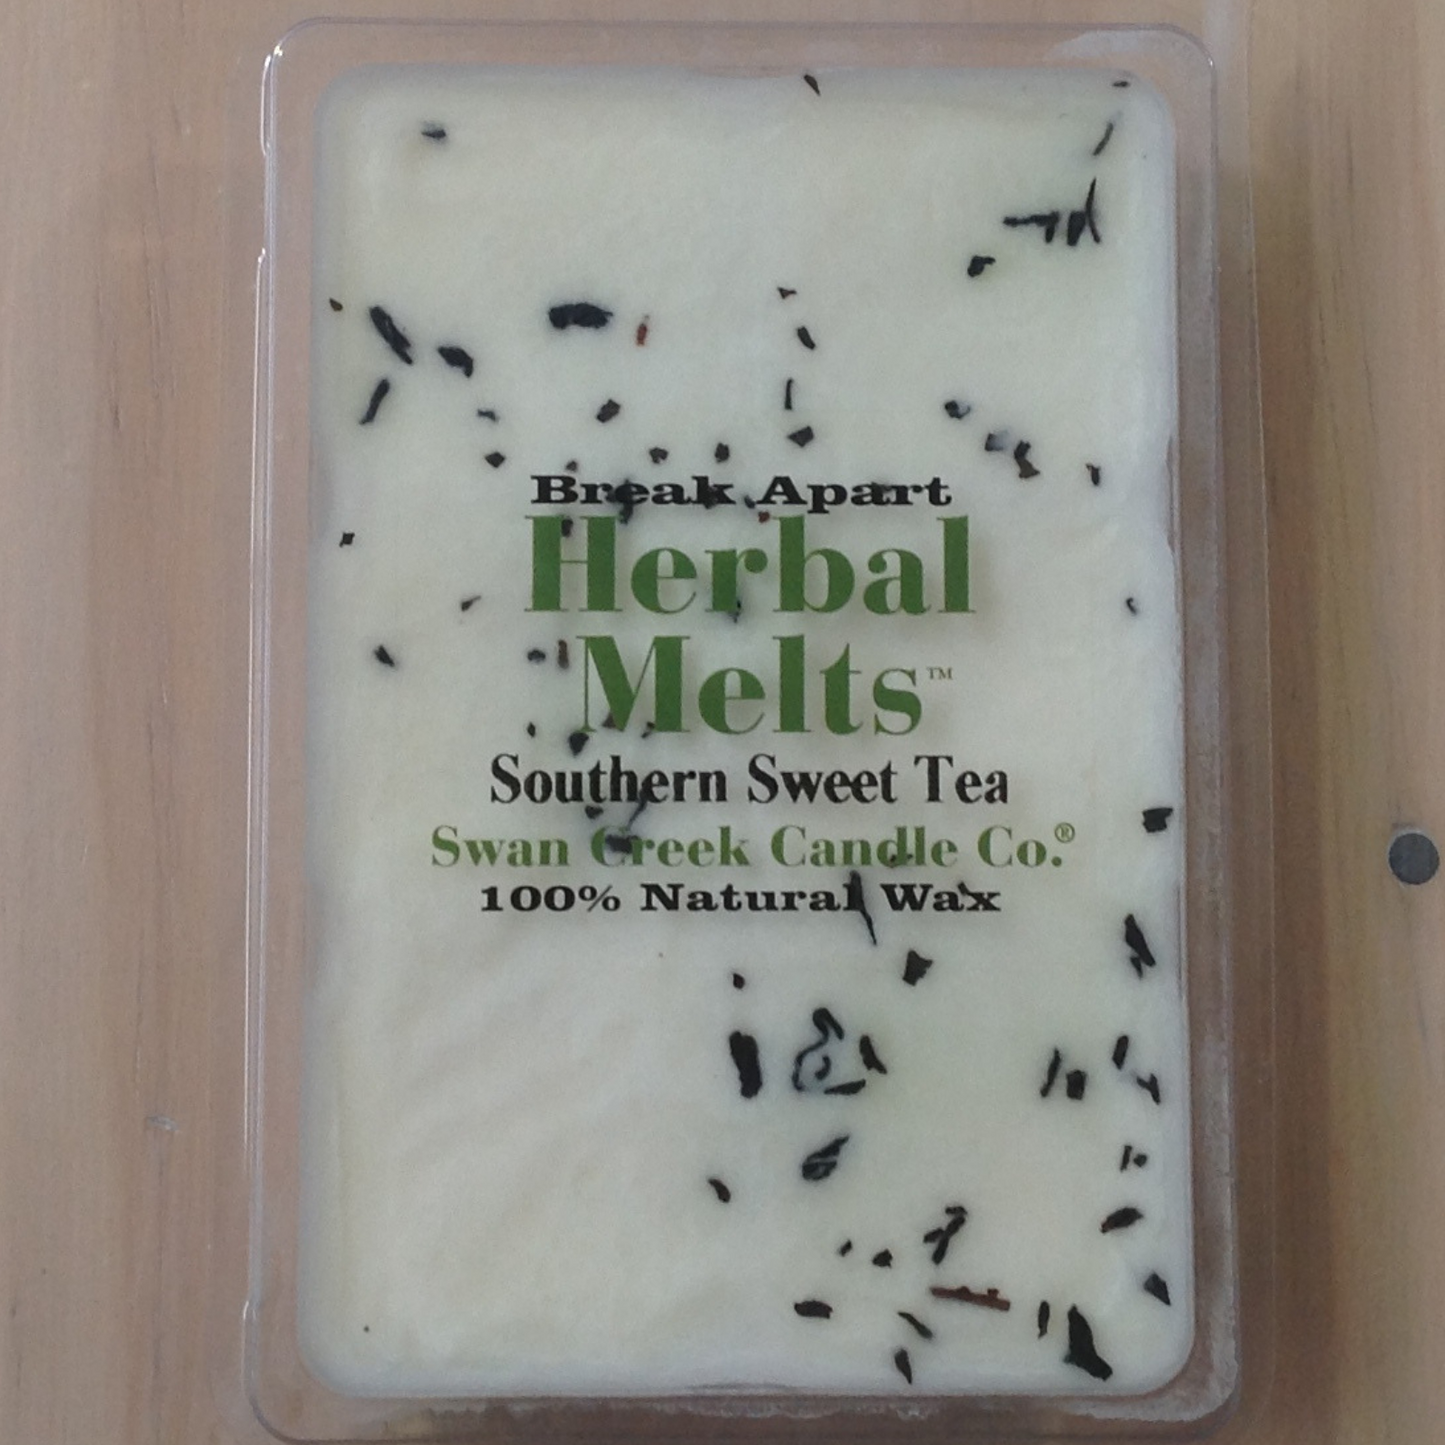 Southern Sweet Tea Herbal Melts